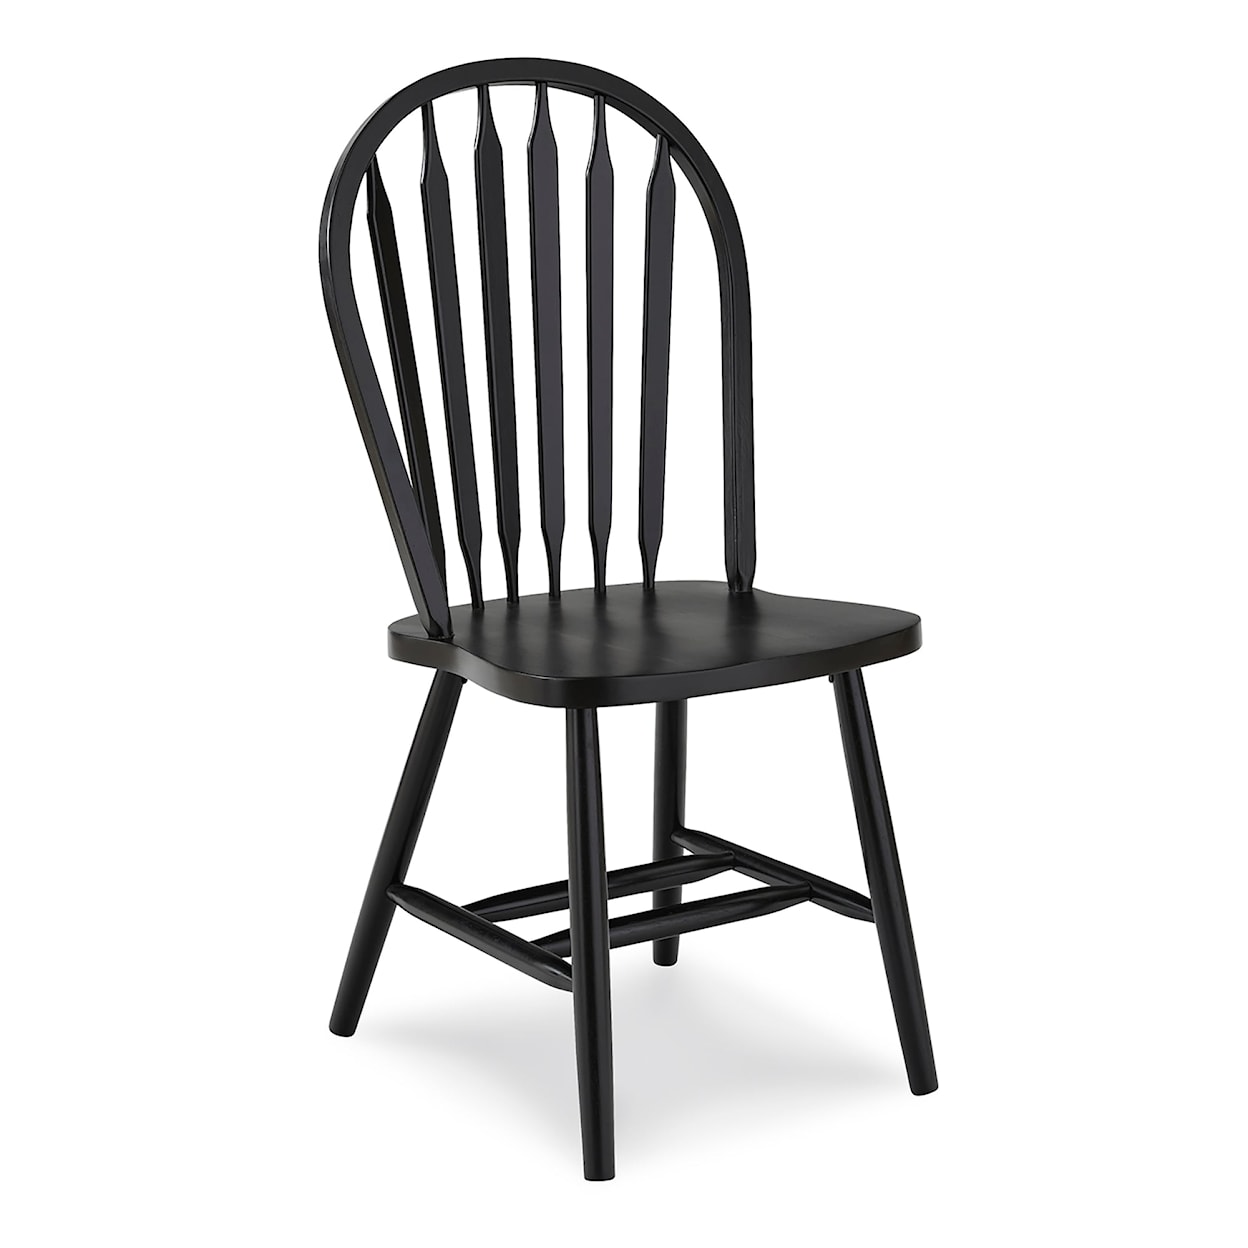 John Thomas Dining Essentials Windsor Arrowback Chair in Black